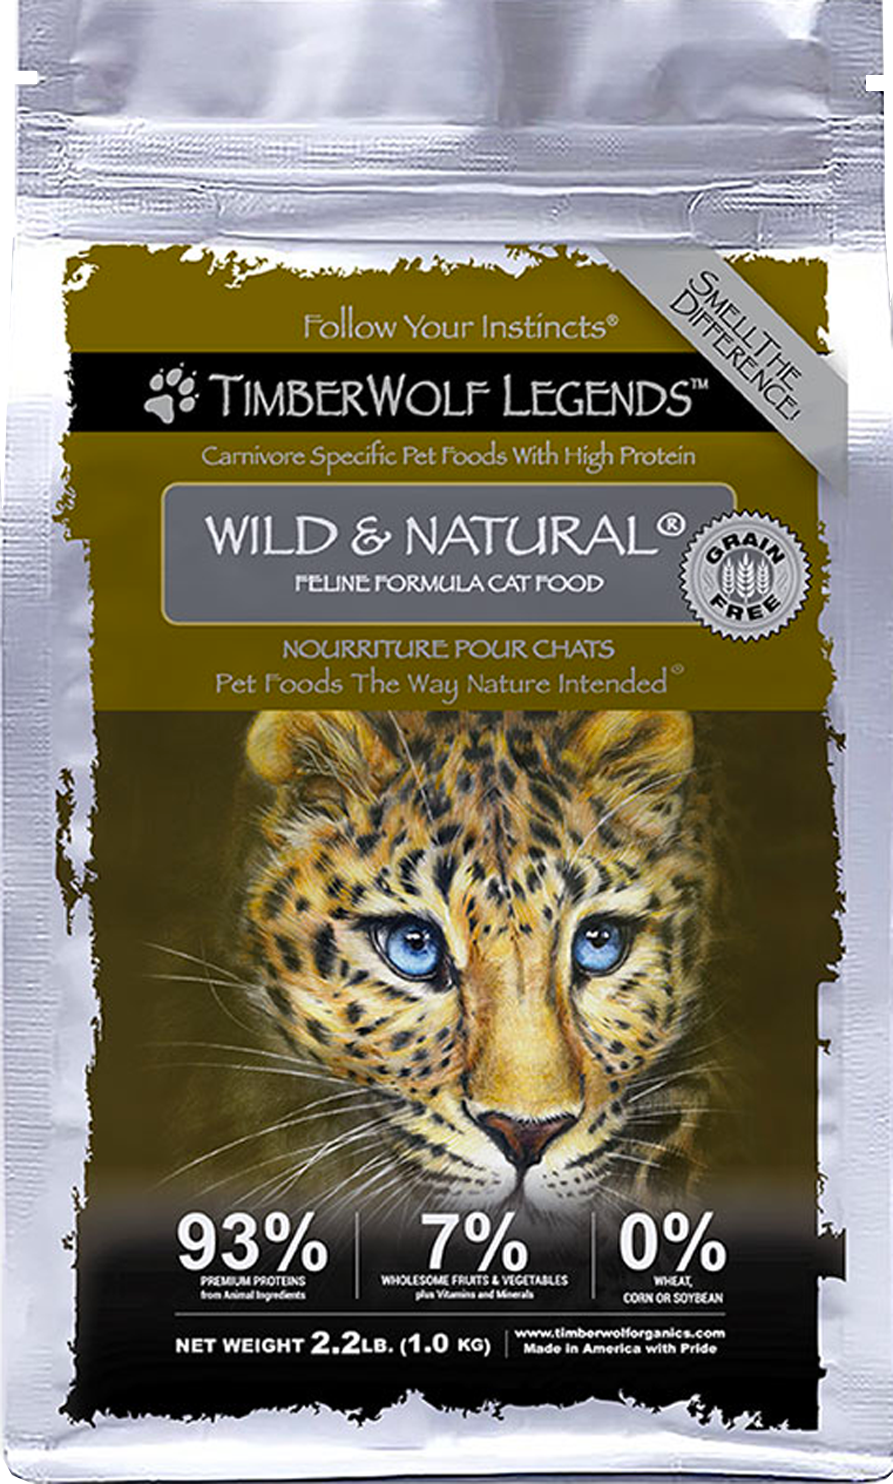 Timberwolf Wild & Natural Legends Feline Formula Chicken Dry Cat Food